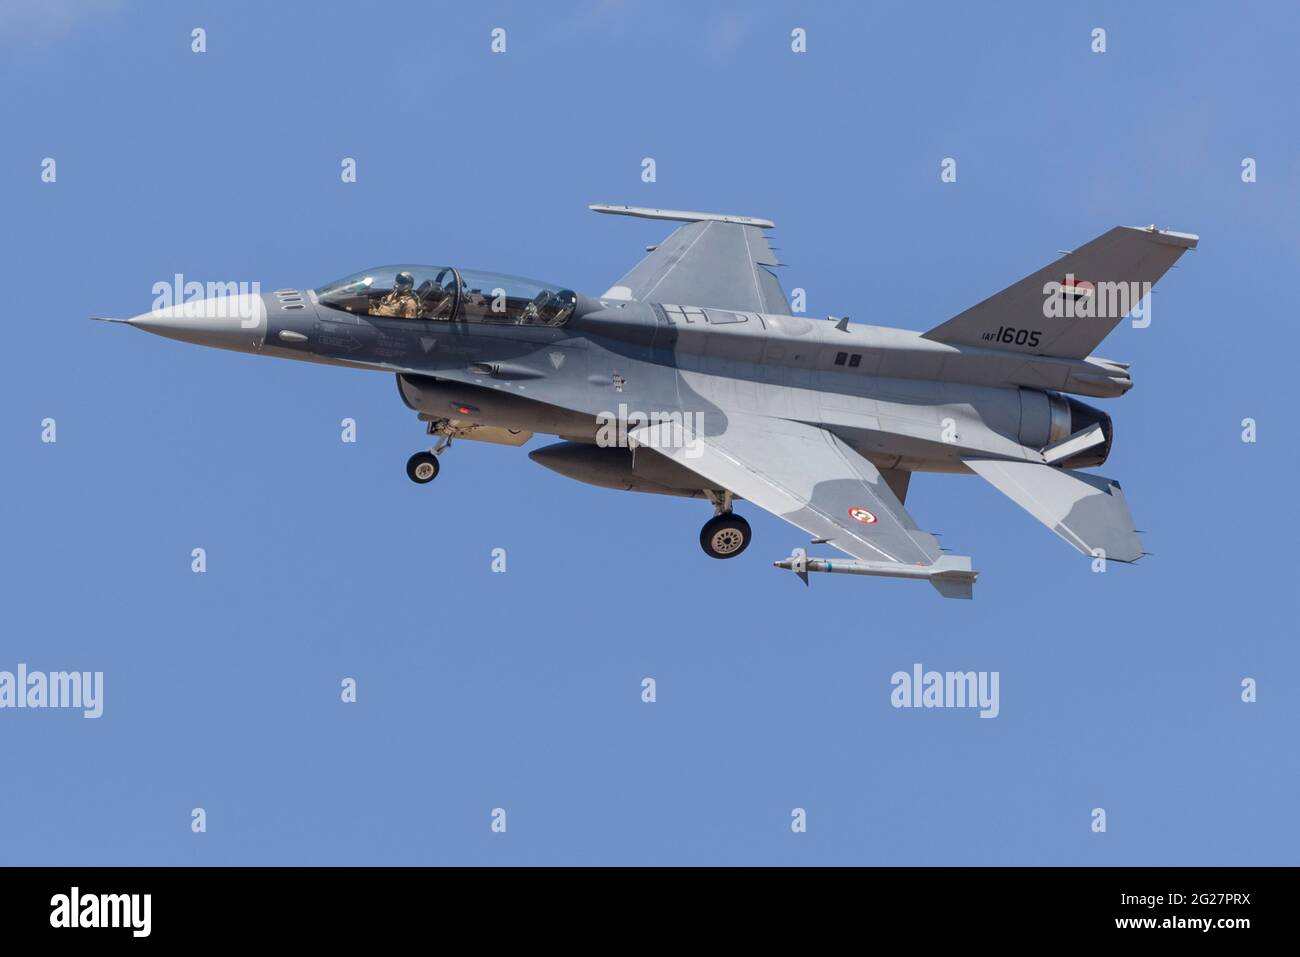 An Iraqi Air Force F-16D Fighting Falcon. Stock Photo